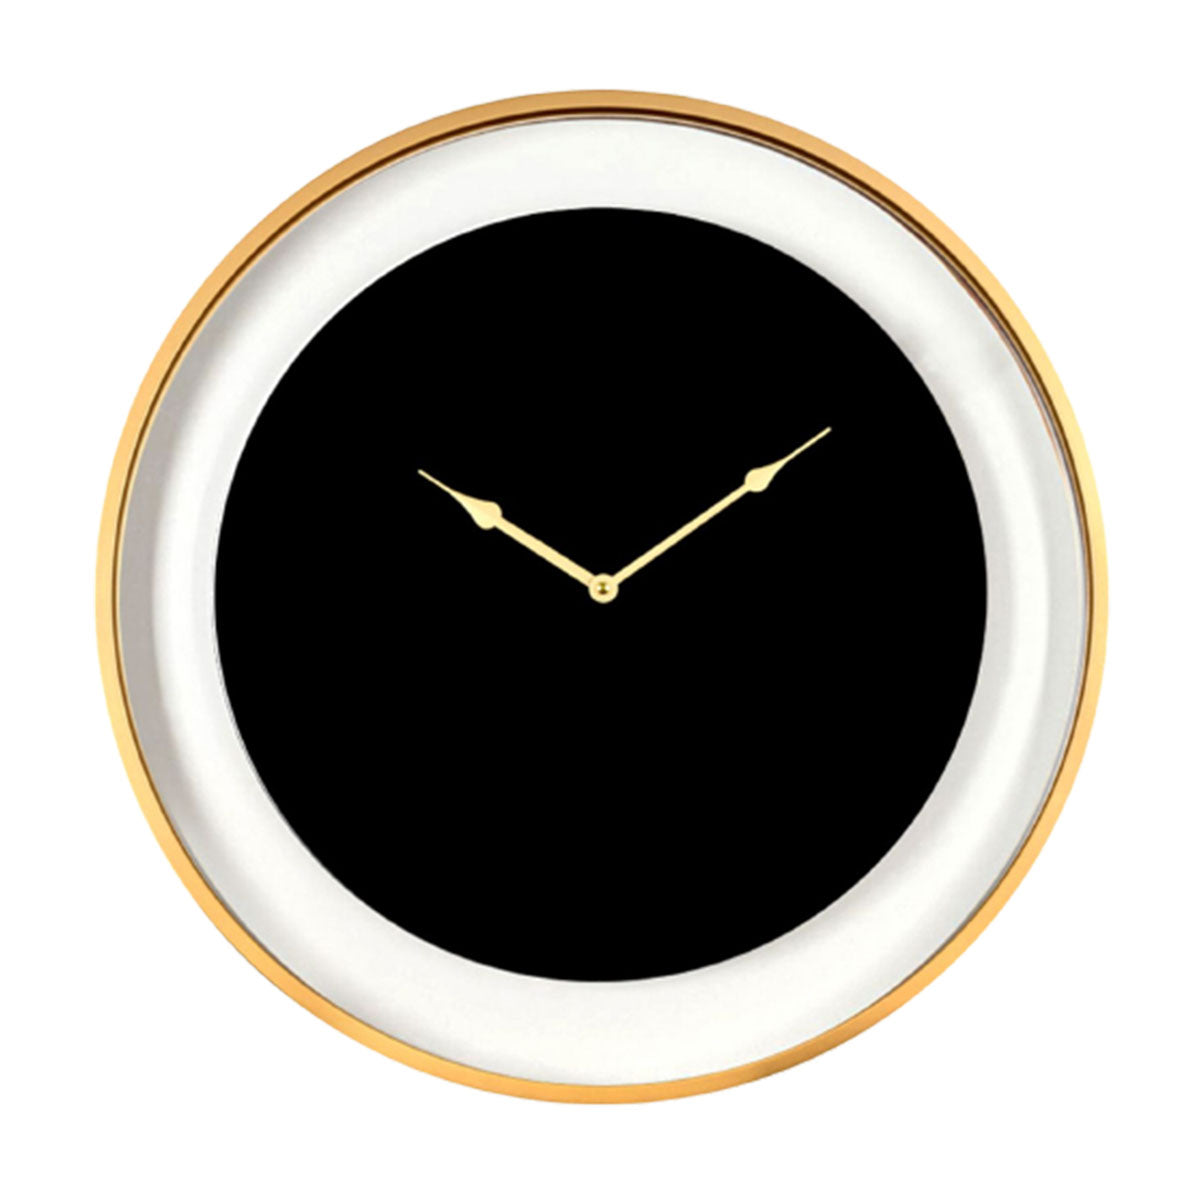 Telford Black Round Wall Clock 60cm diameter with Matt Gold Detail